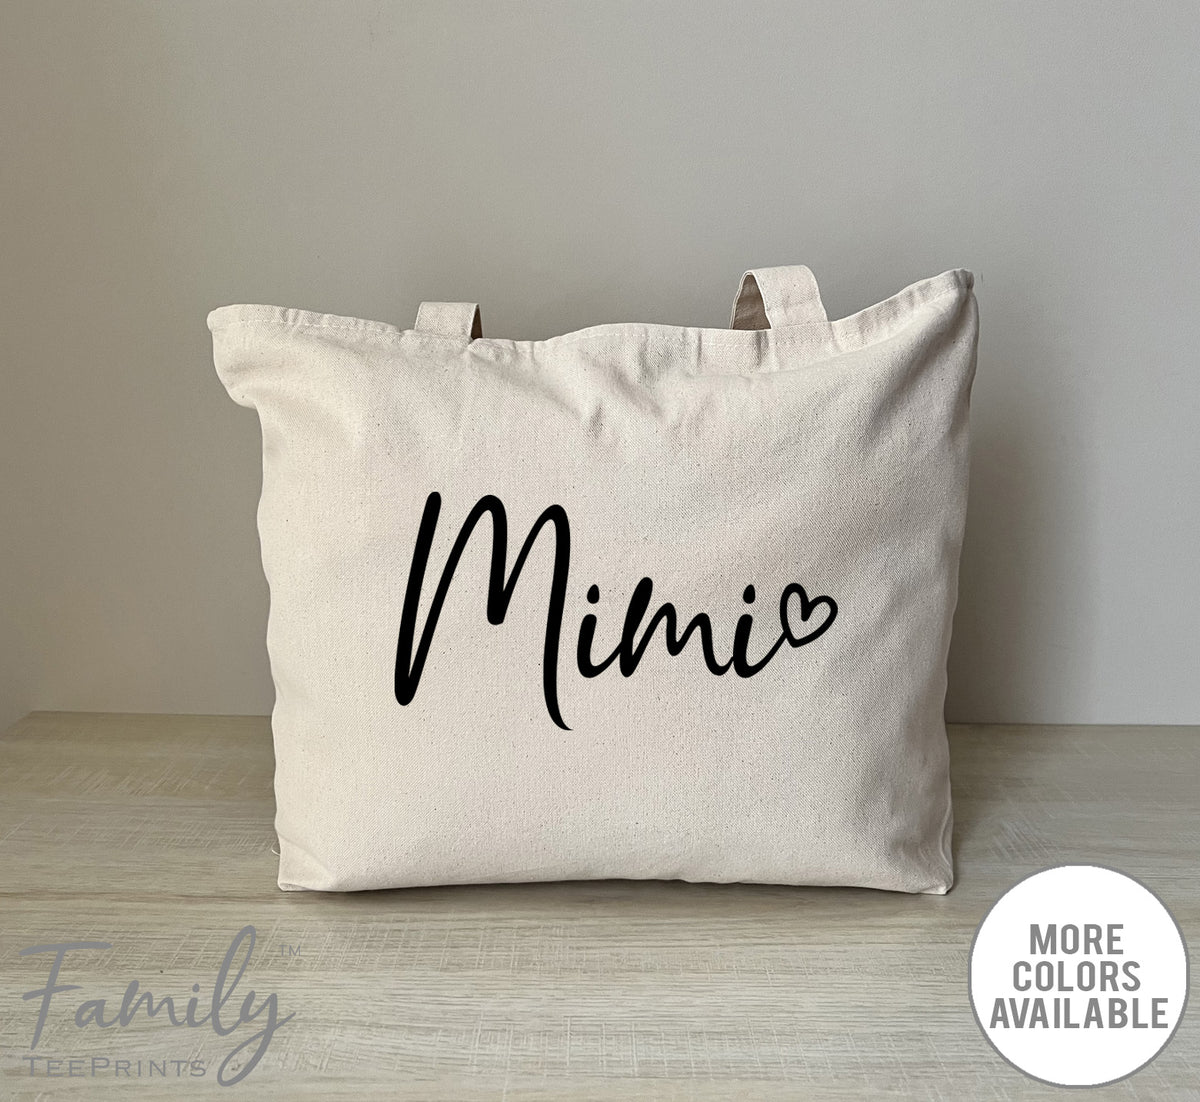 Mimi Heart - Zippered Tote Bag - Mimi Bag - Mimi Gift - familyteeprints